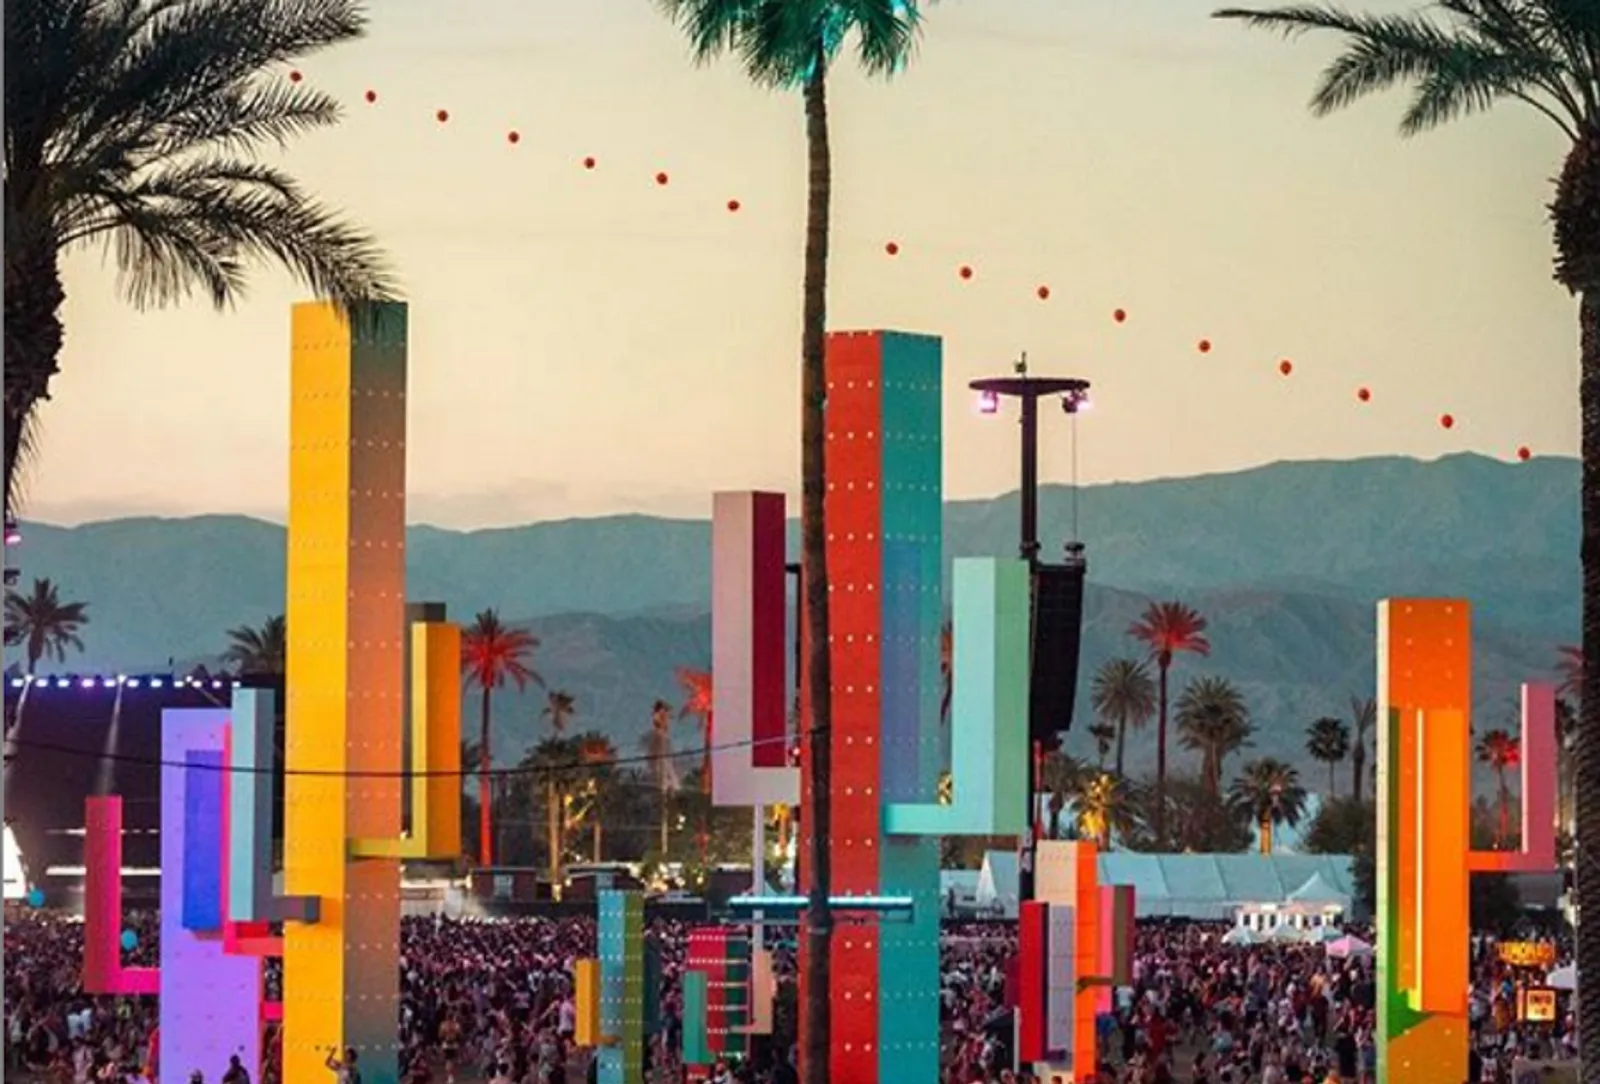 Panduan Festival Coachella 2022: Line-up, Harga Tiket hingga Pesta